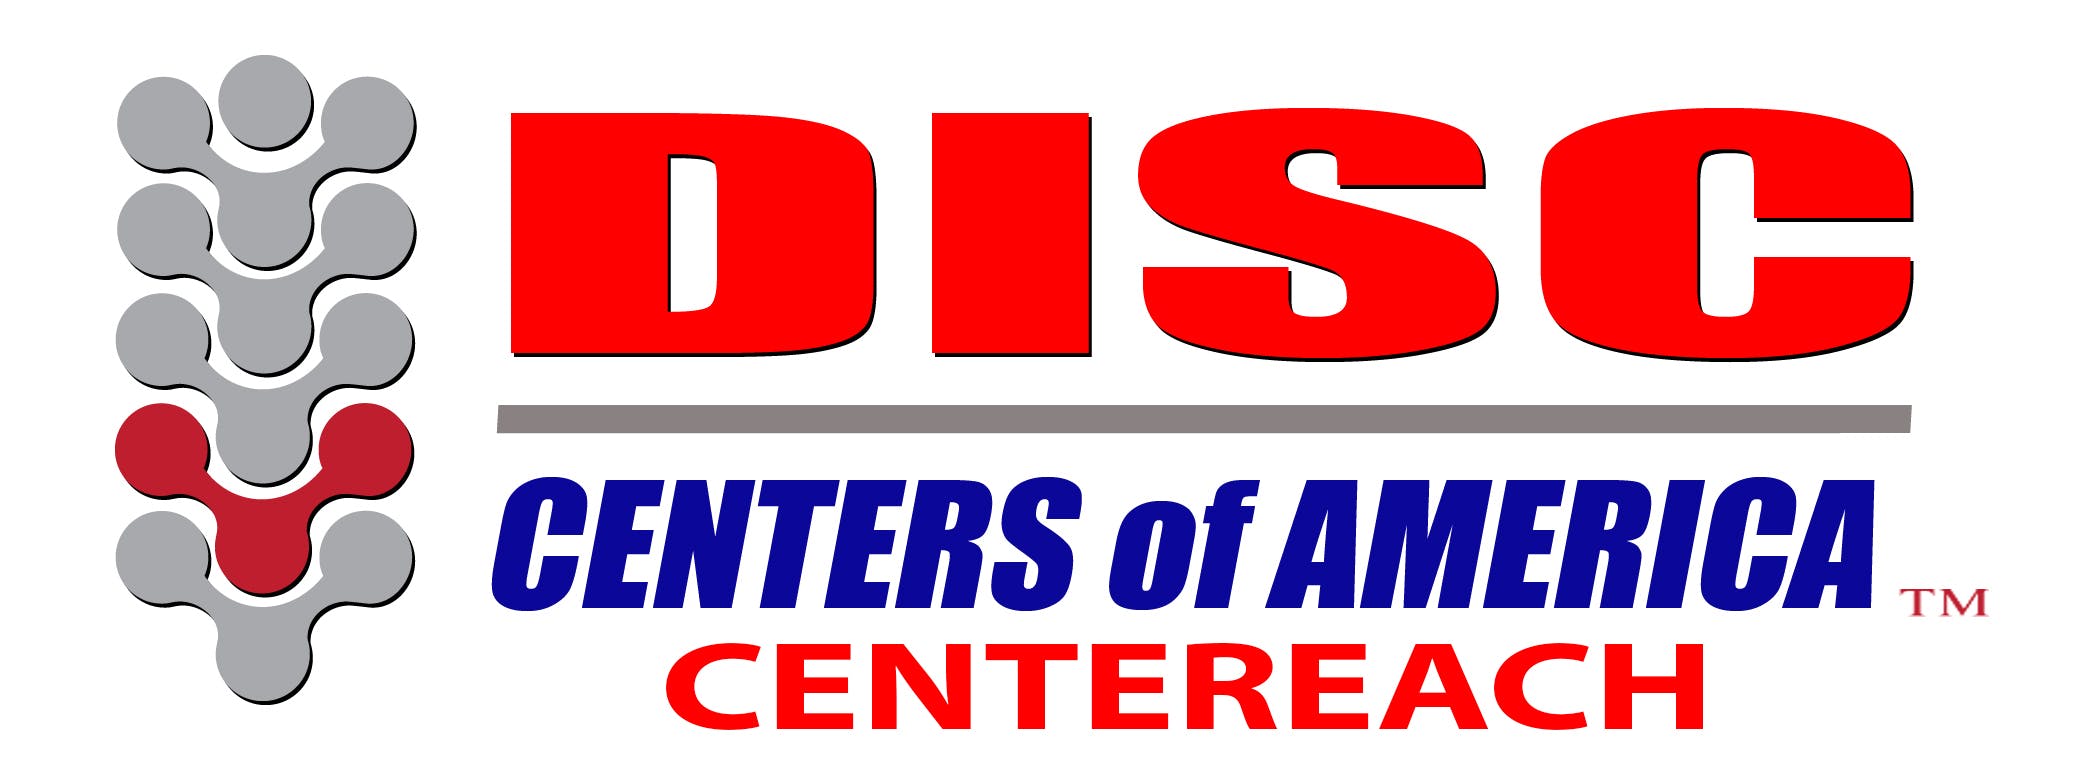 DISC Centers of America - Centereach